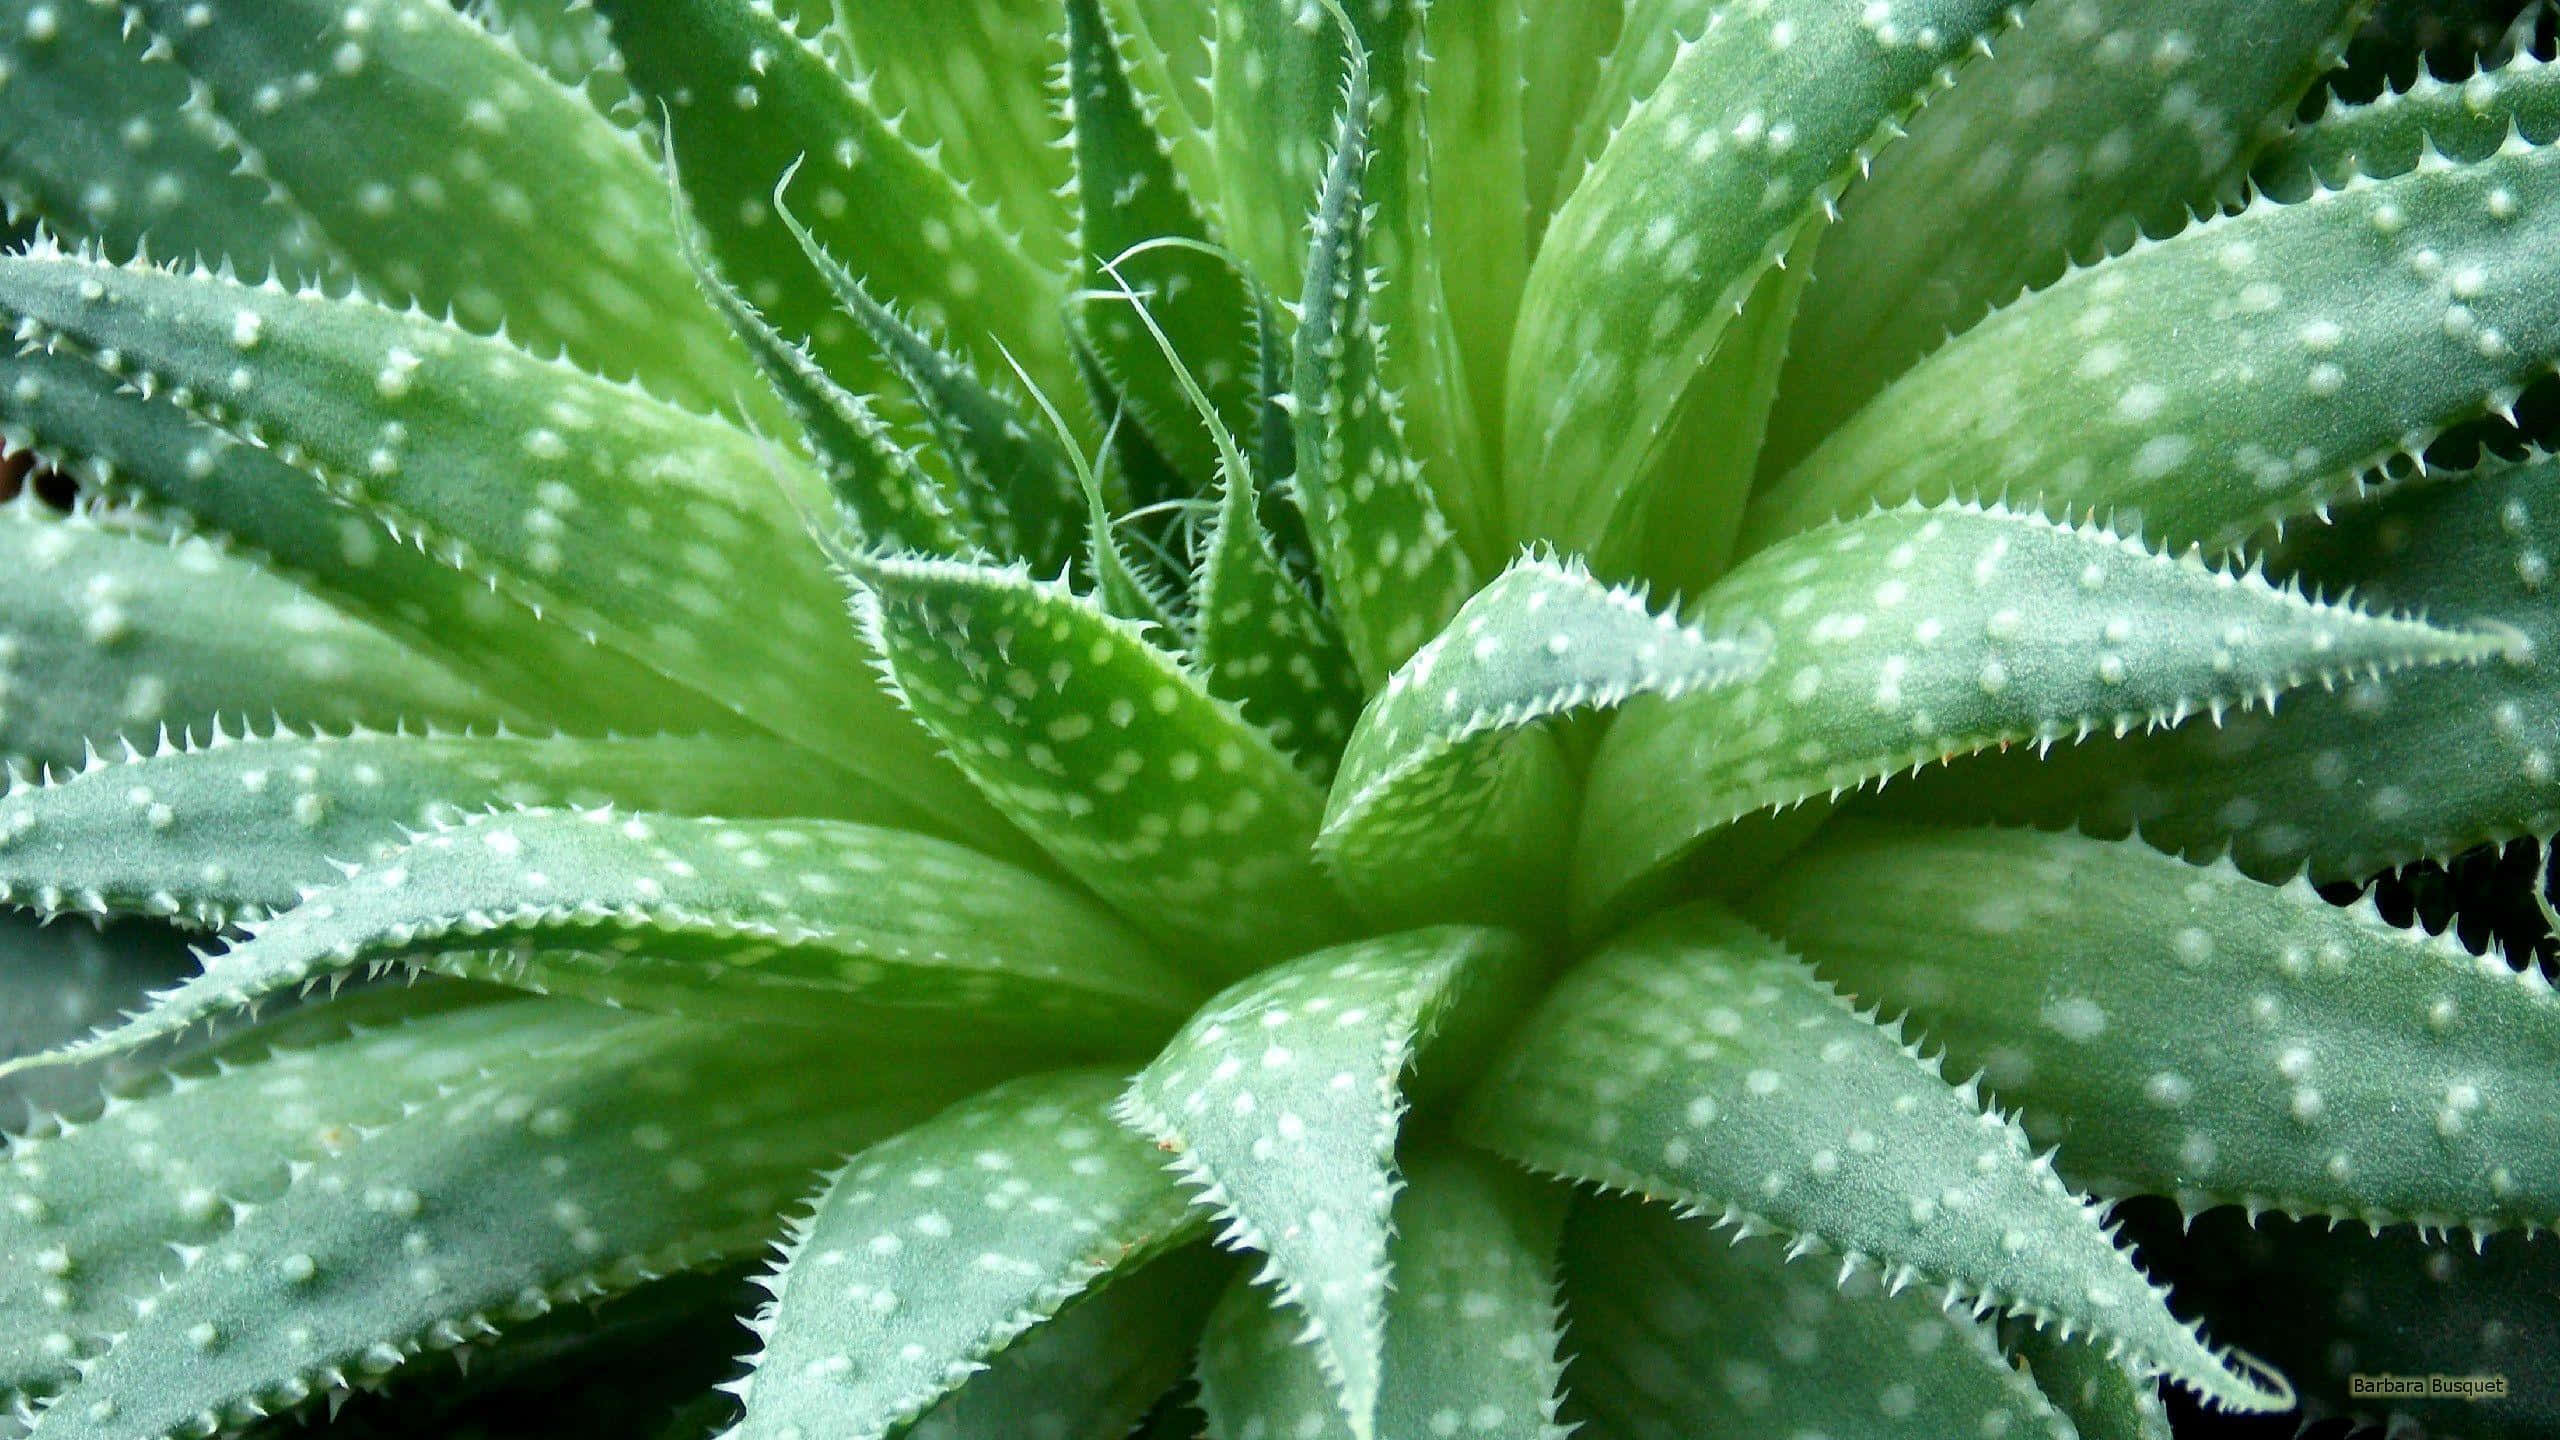 Aloe Vera Plant in Natural Environment